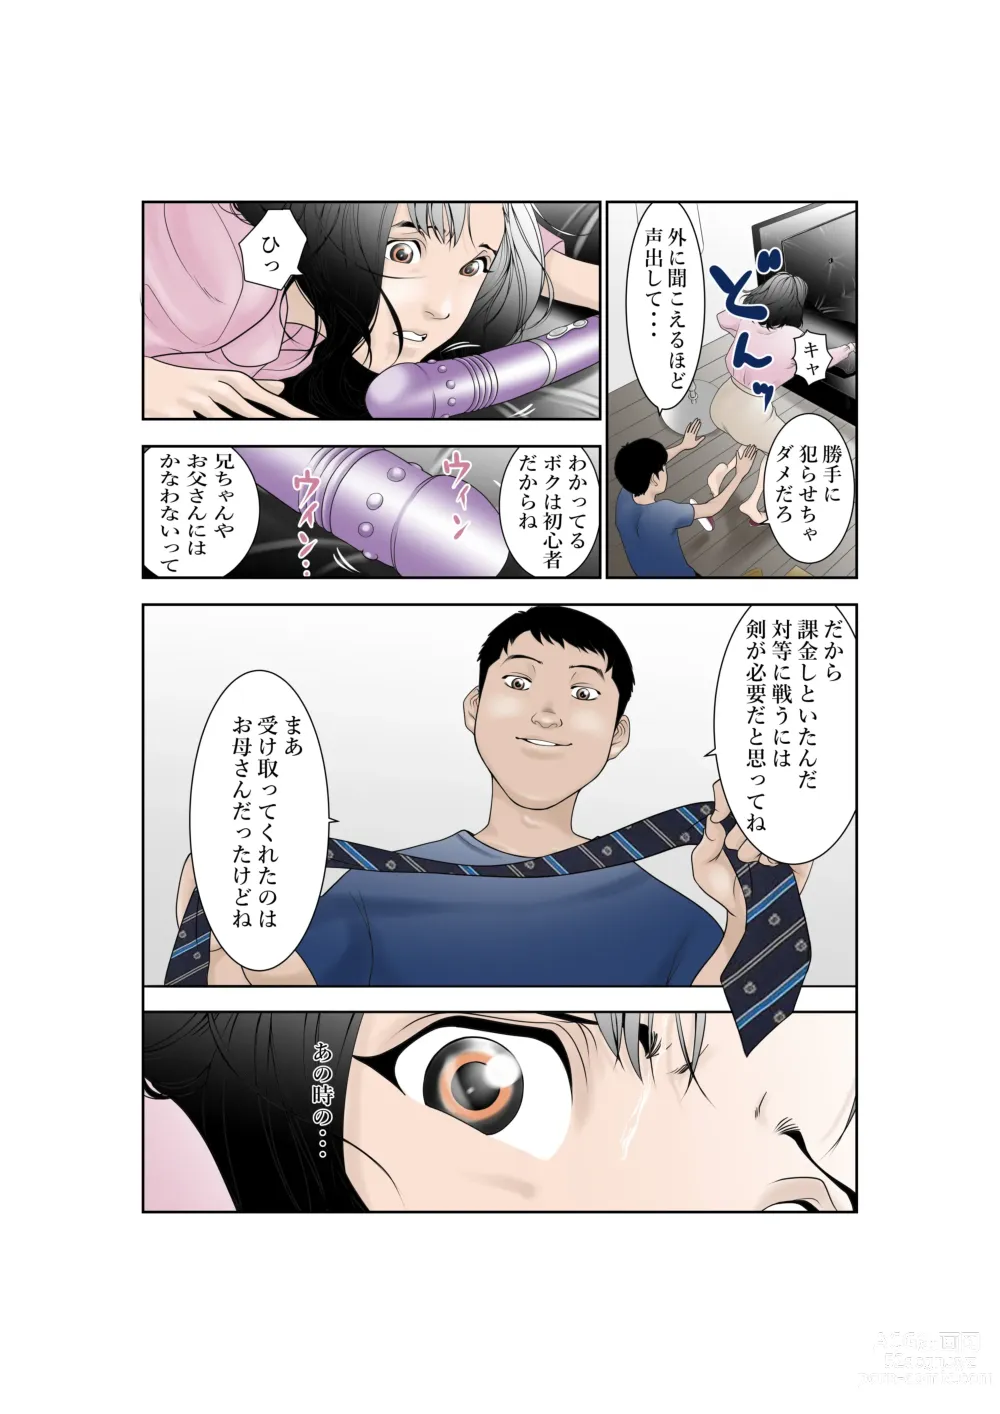 Page 40 of doujinshi Shiawase Kazoku no Sodate kata